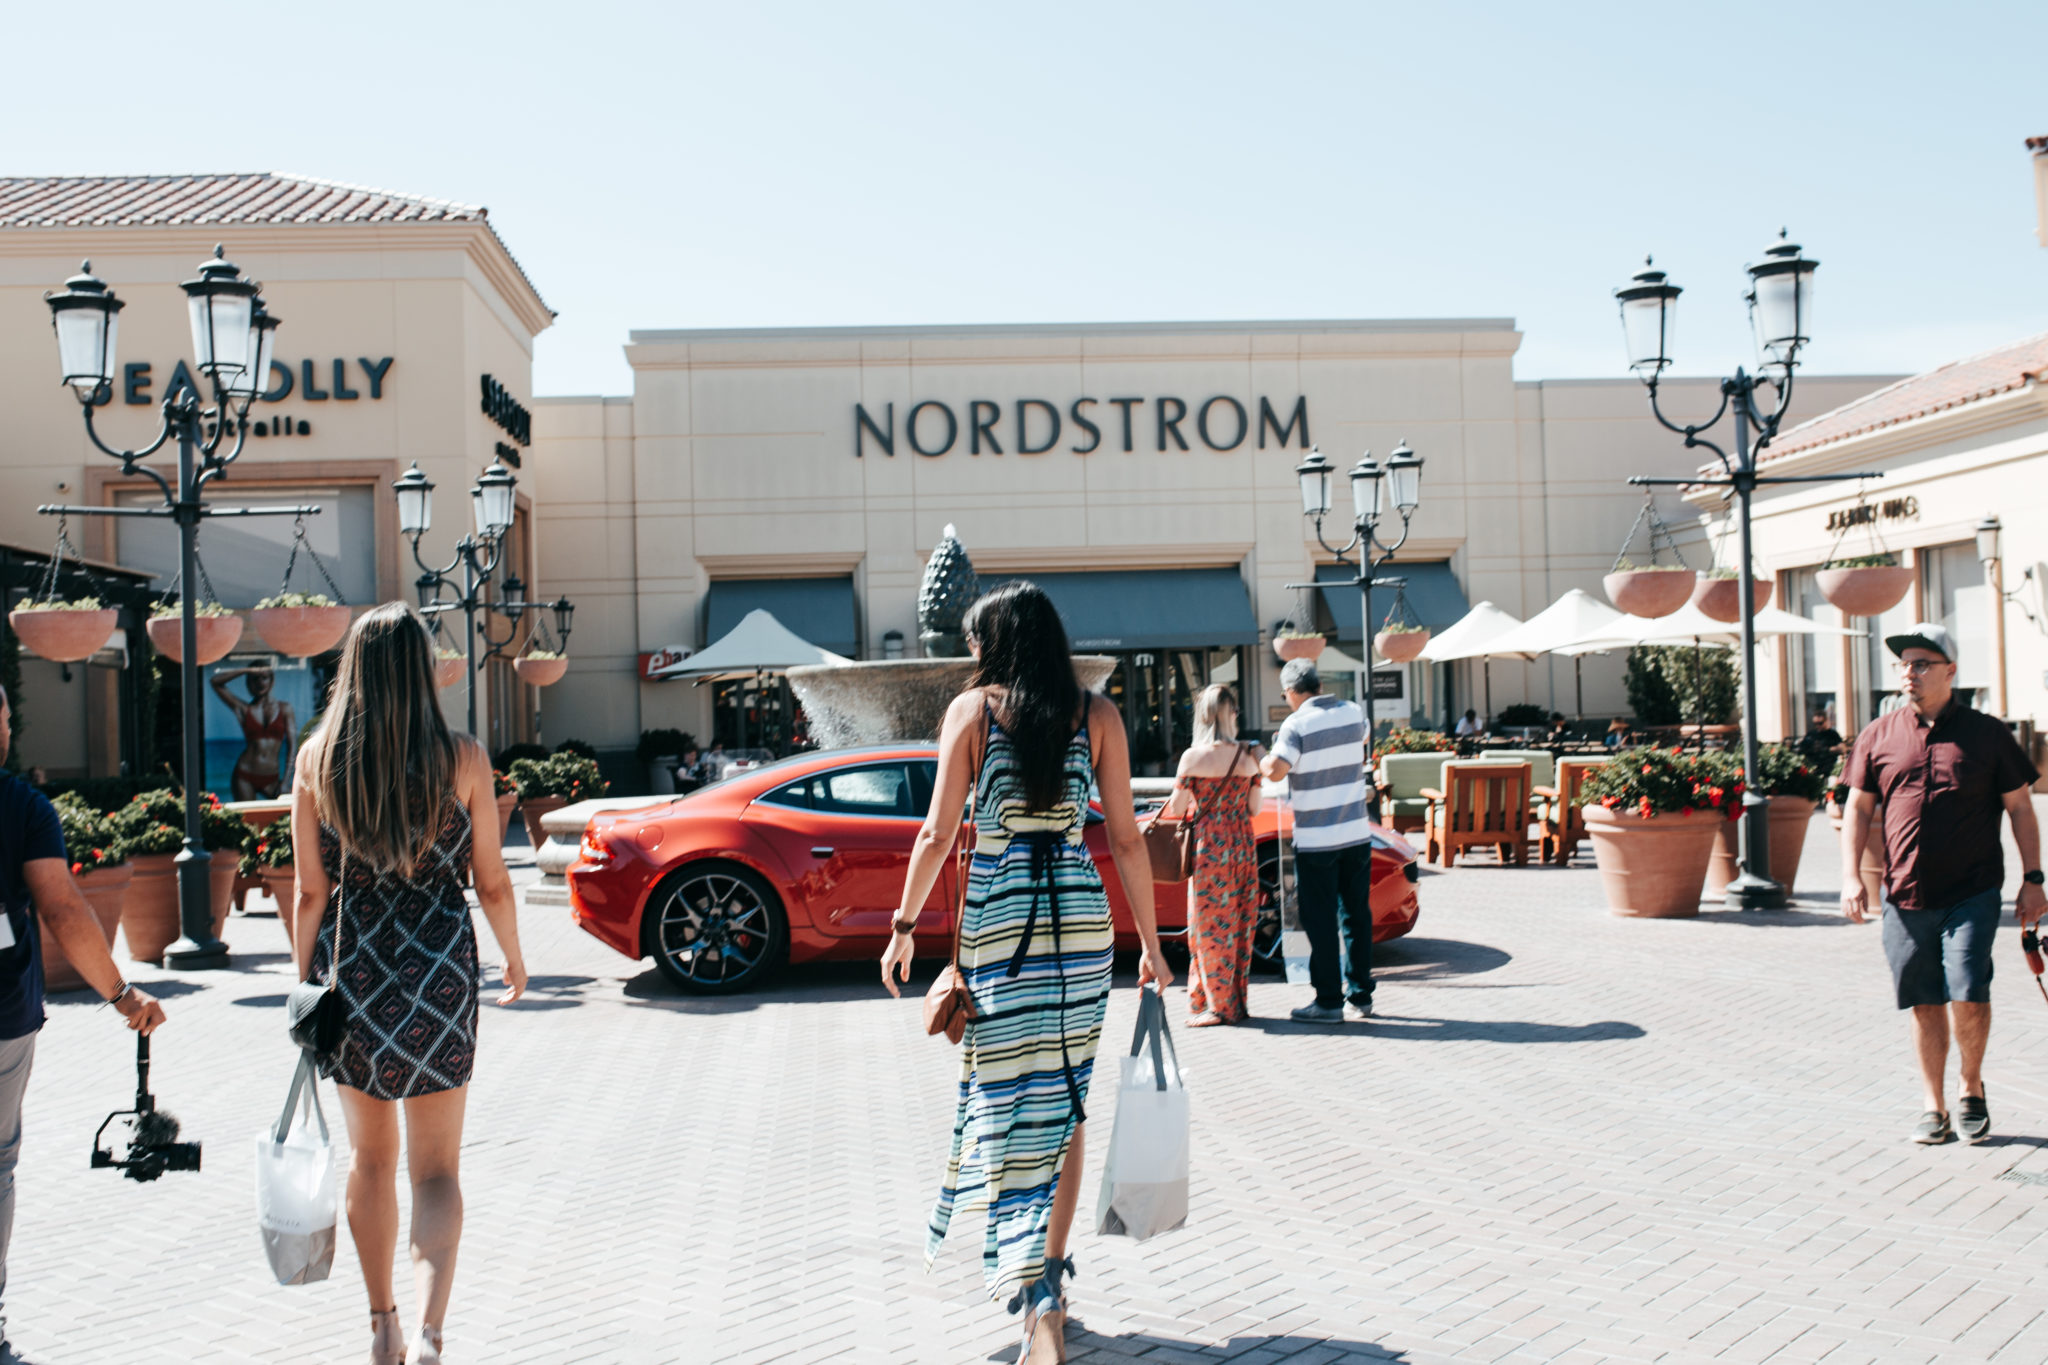 Nordstrom at Fashion Island in Newport Beach, CA, PatricksMercy